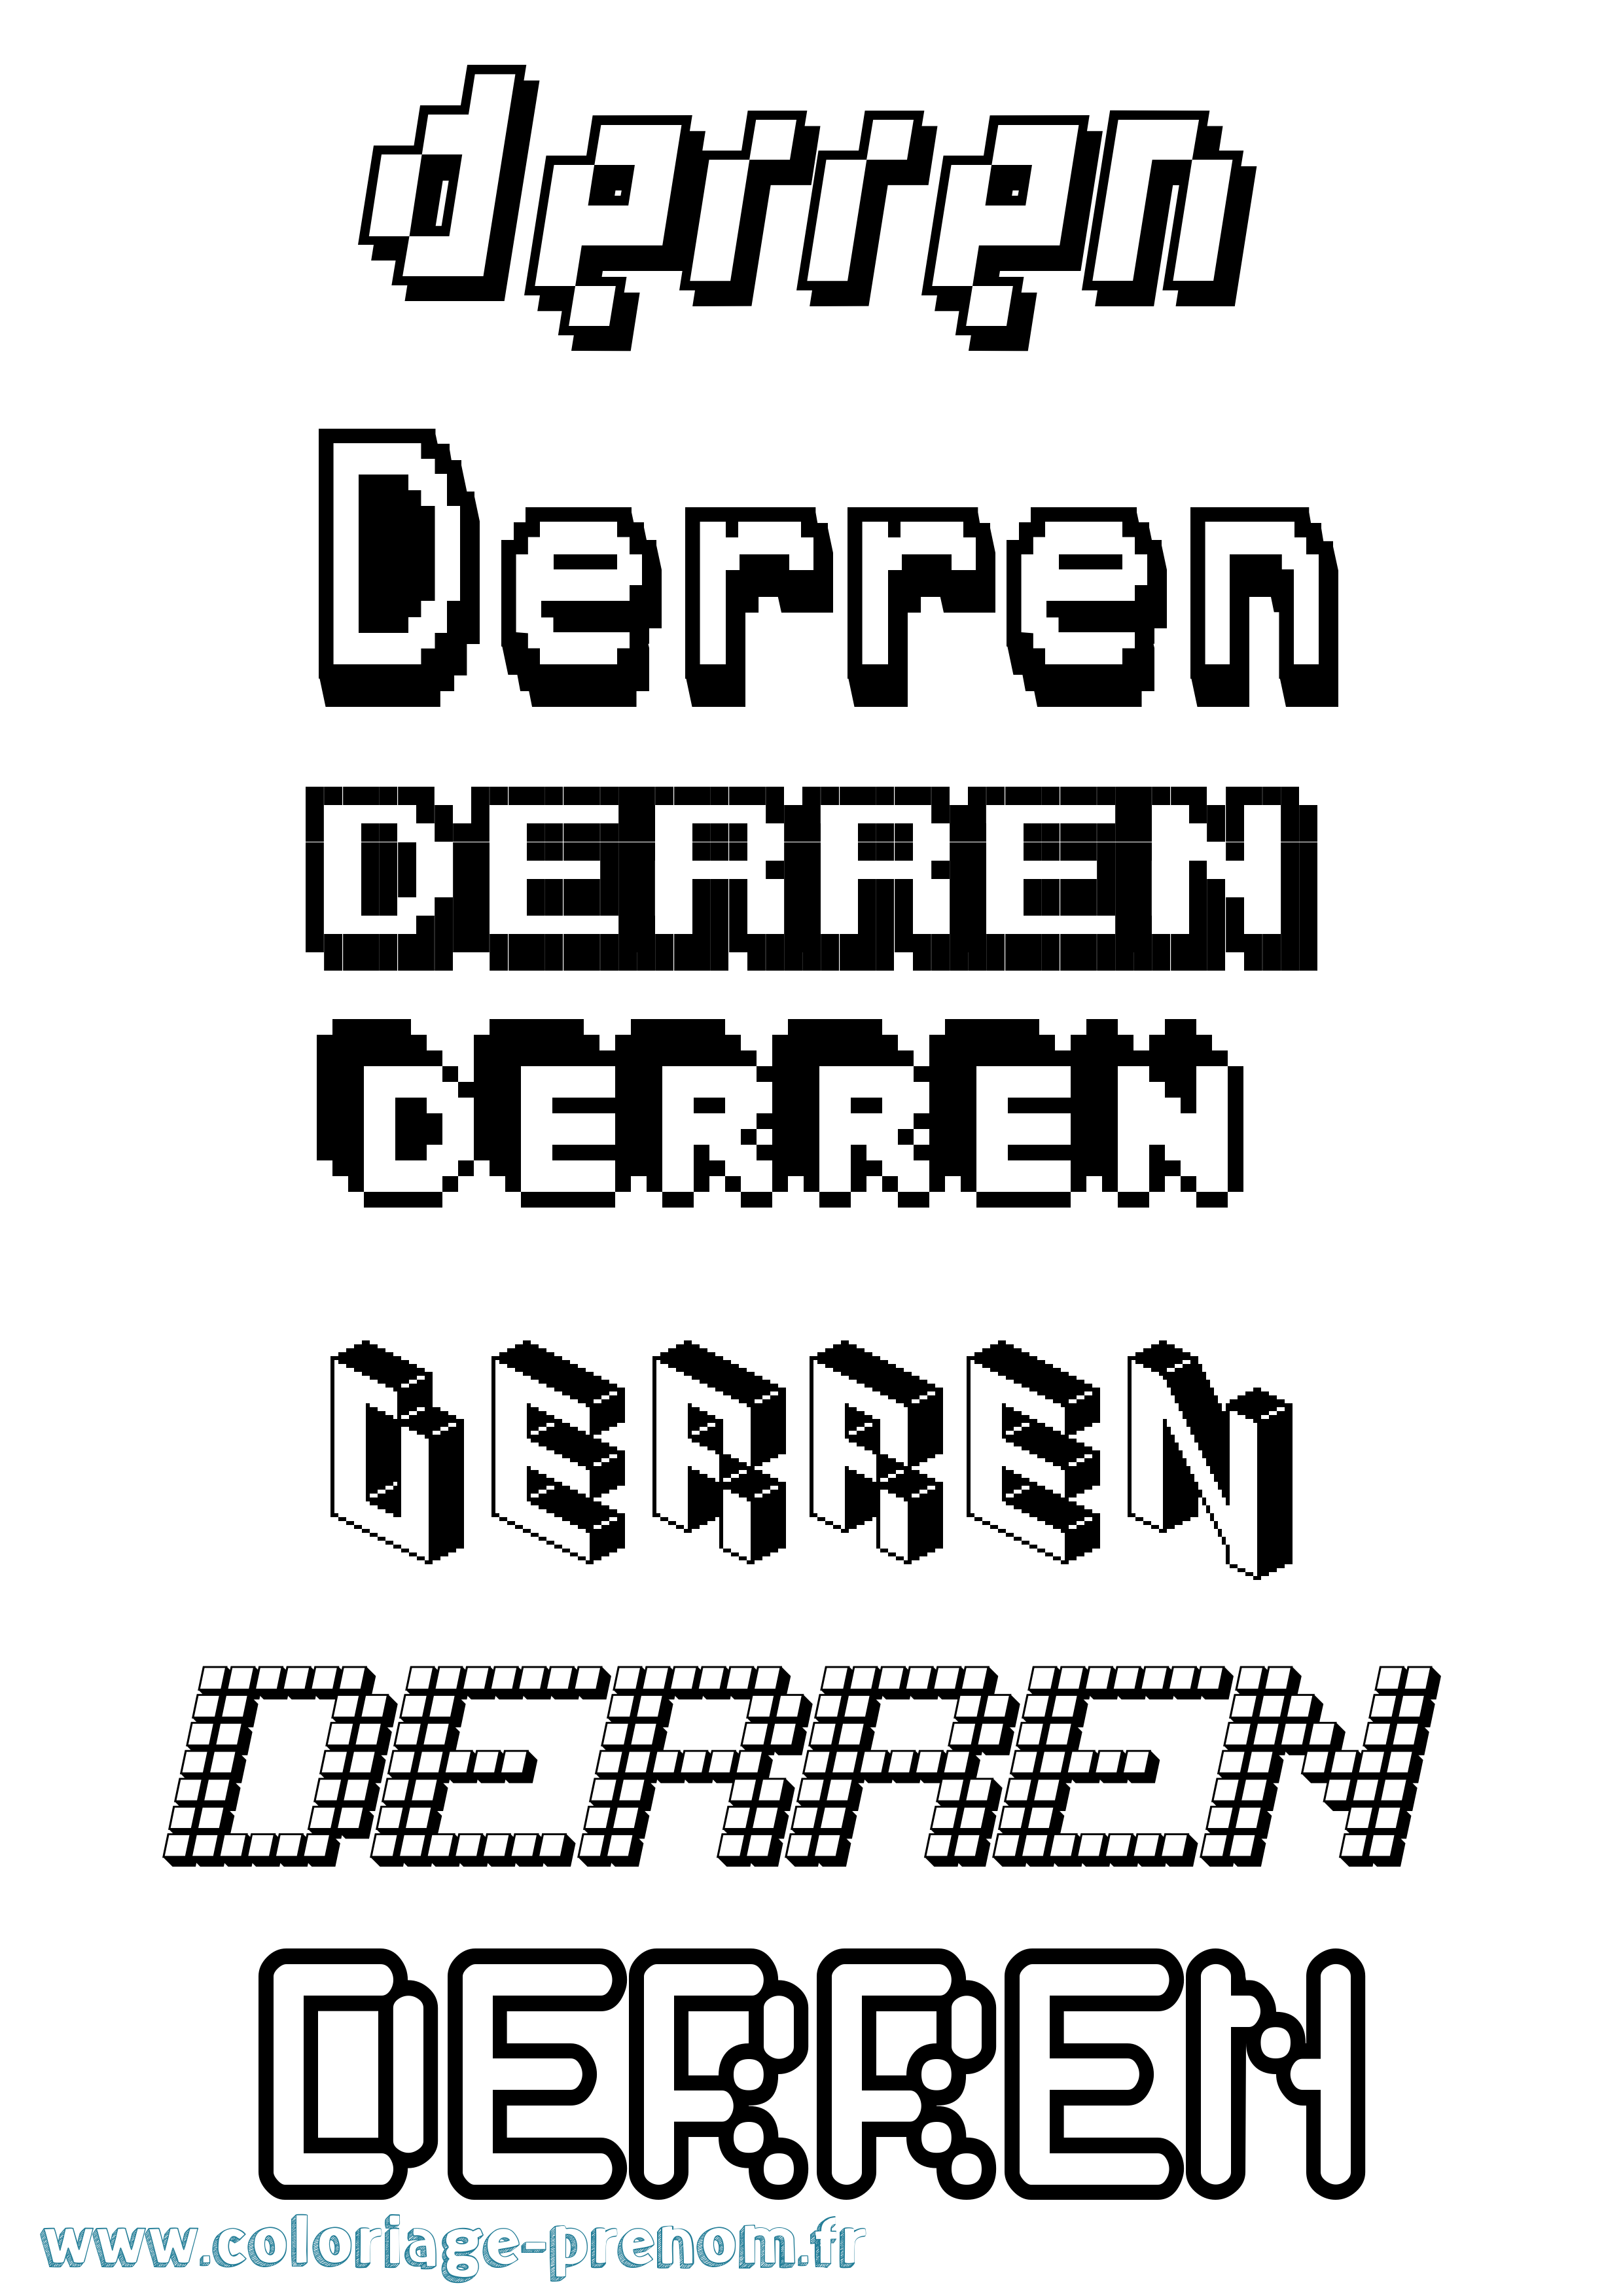 Coloriage prénom Derren Pixel